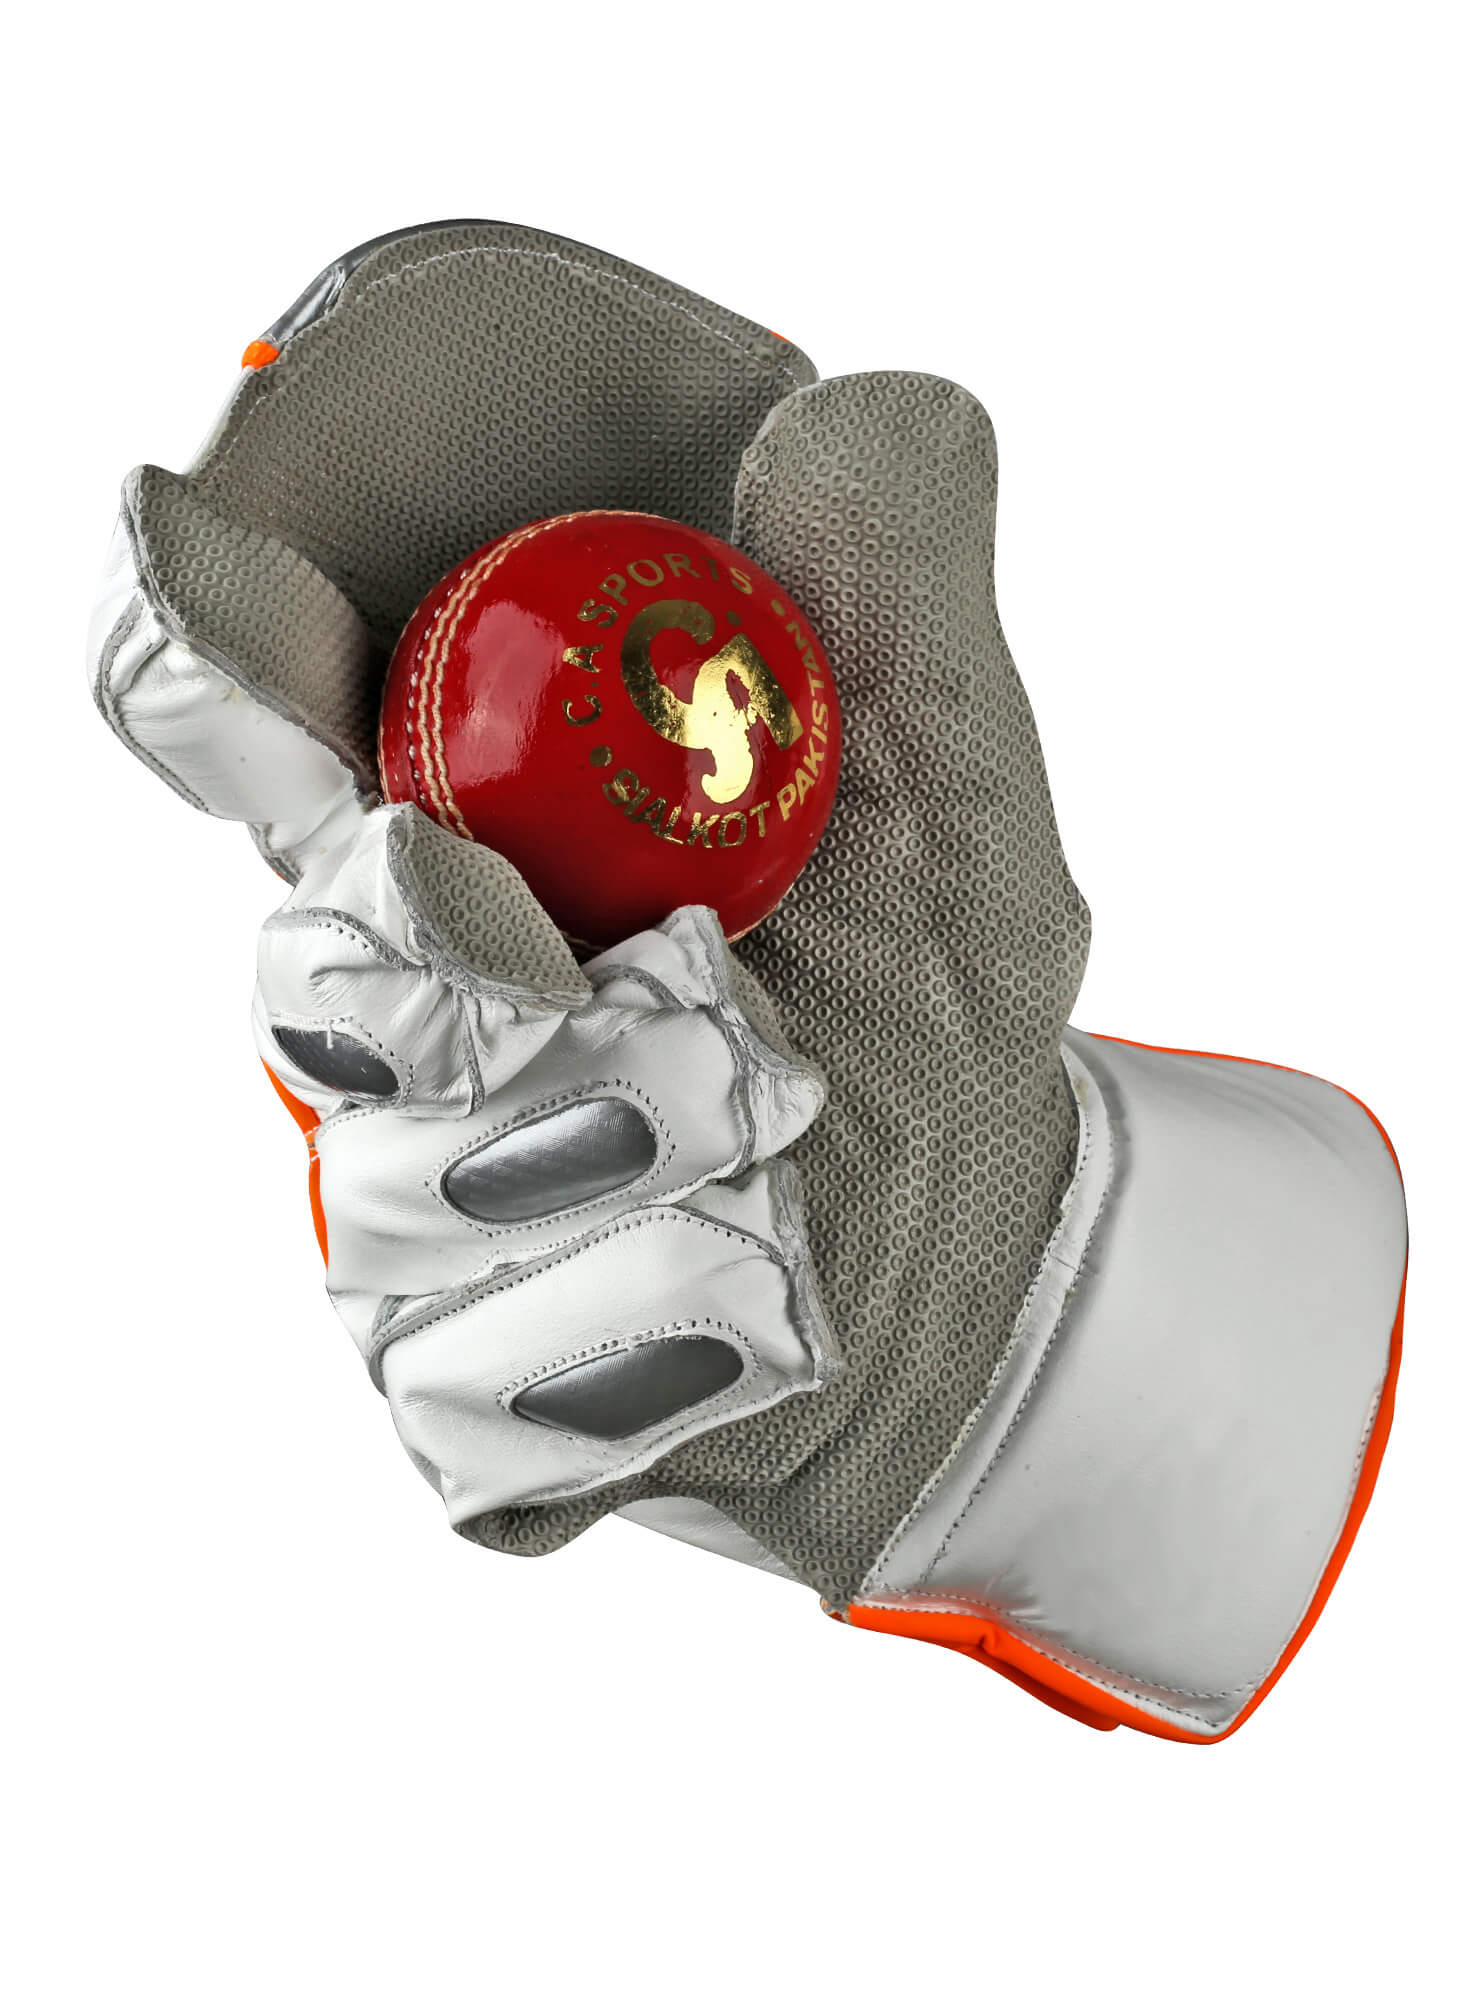 wicket keeping gloves